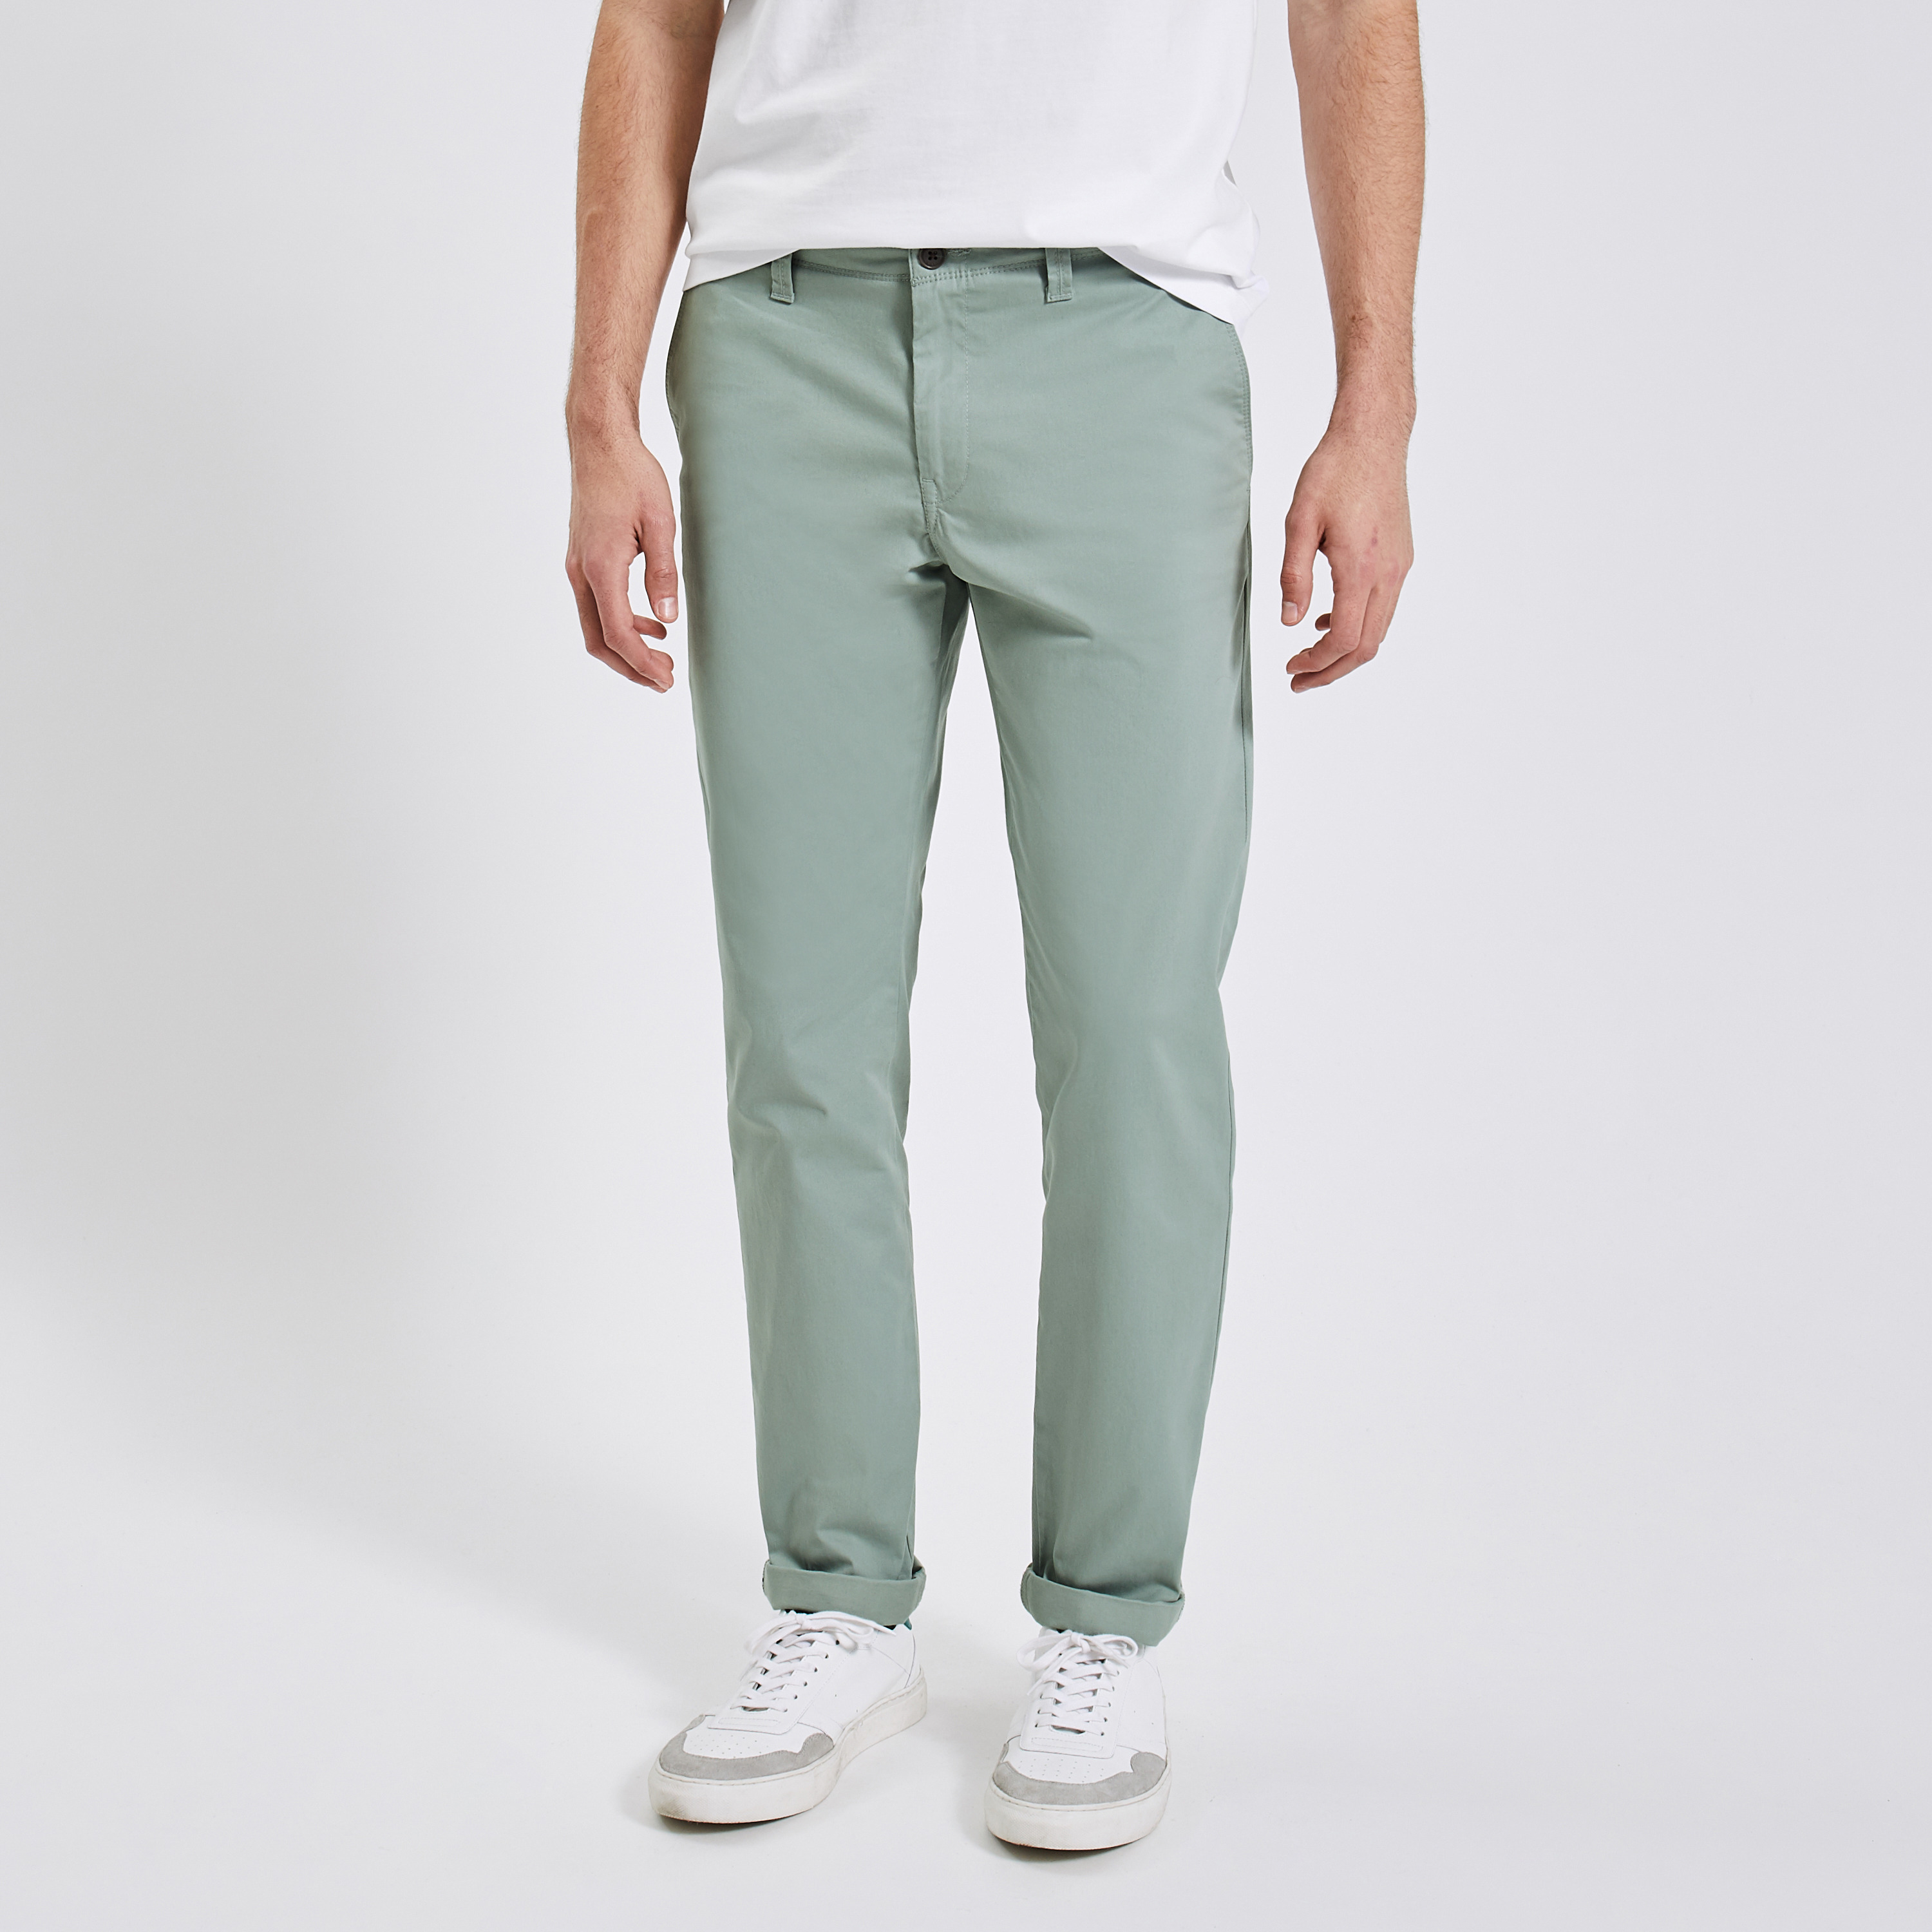 Pantalon chino slim Vert Moyen L34 40 97% Coton, 3% Elasthanne Homme Jules